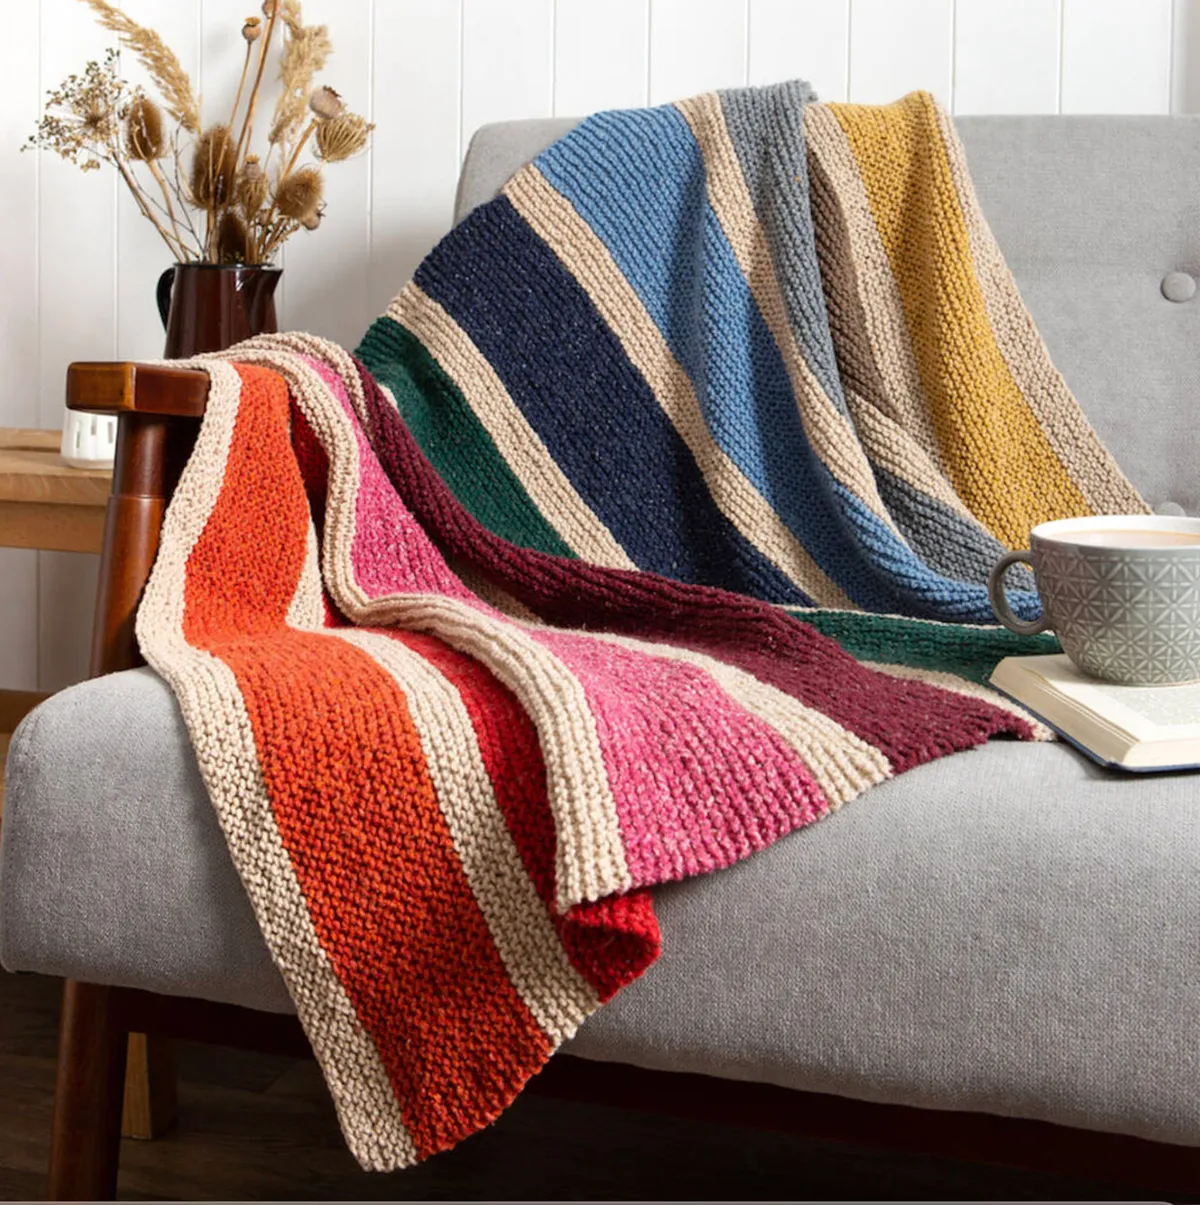 Rainbow blanket knitting kit